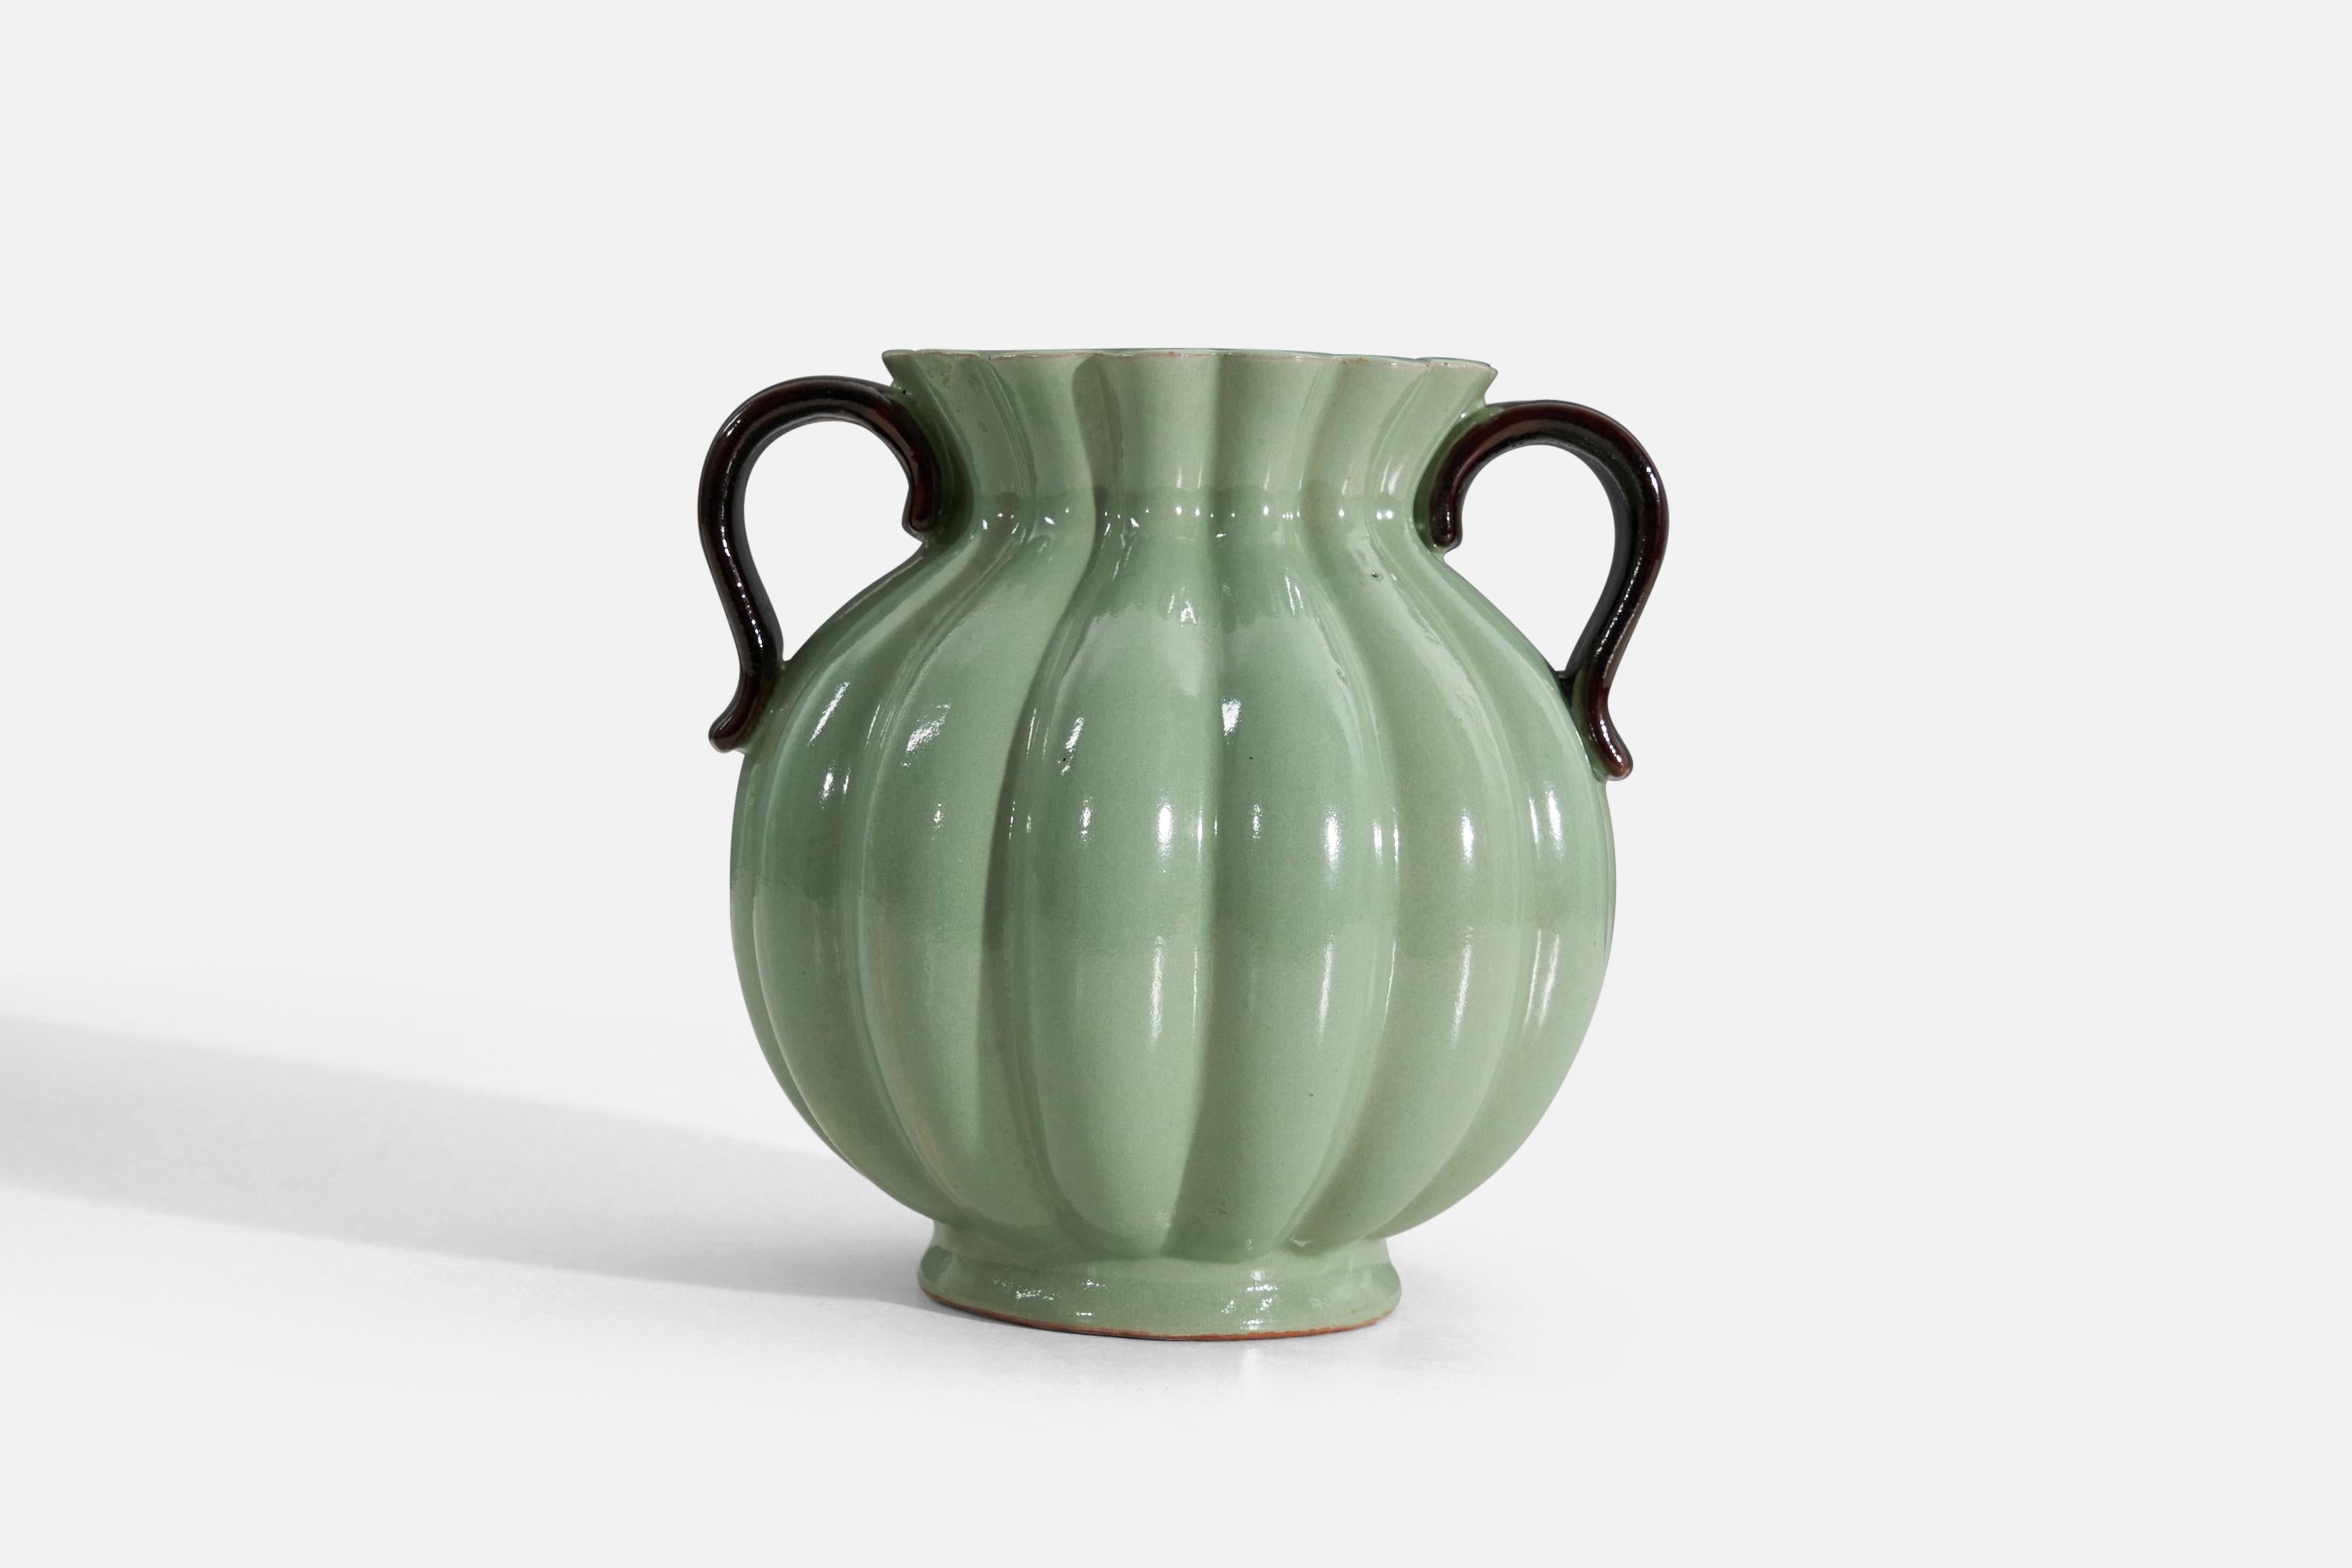 A green and black-glazed vase produced by Upsala-Ekeby, Sweden, 1940s.

